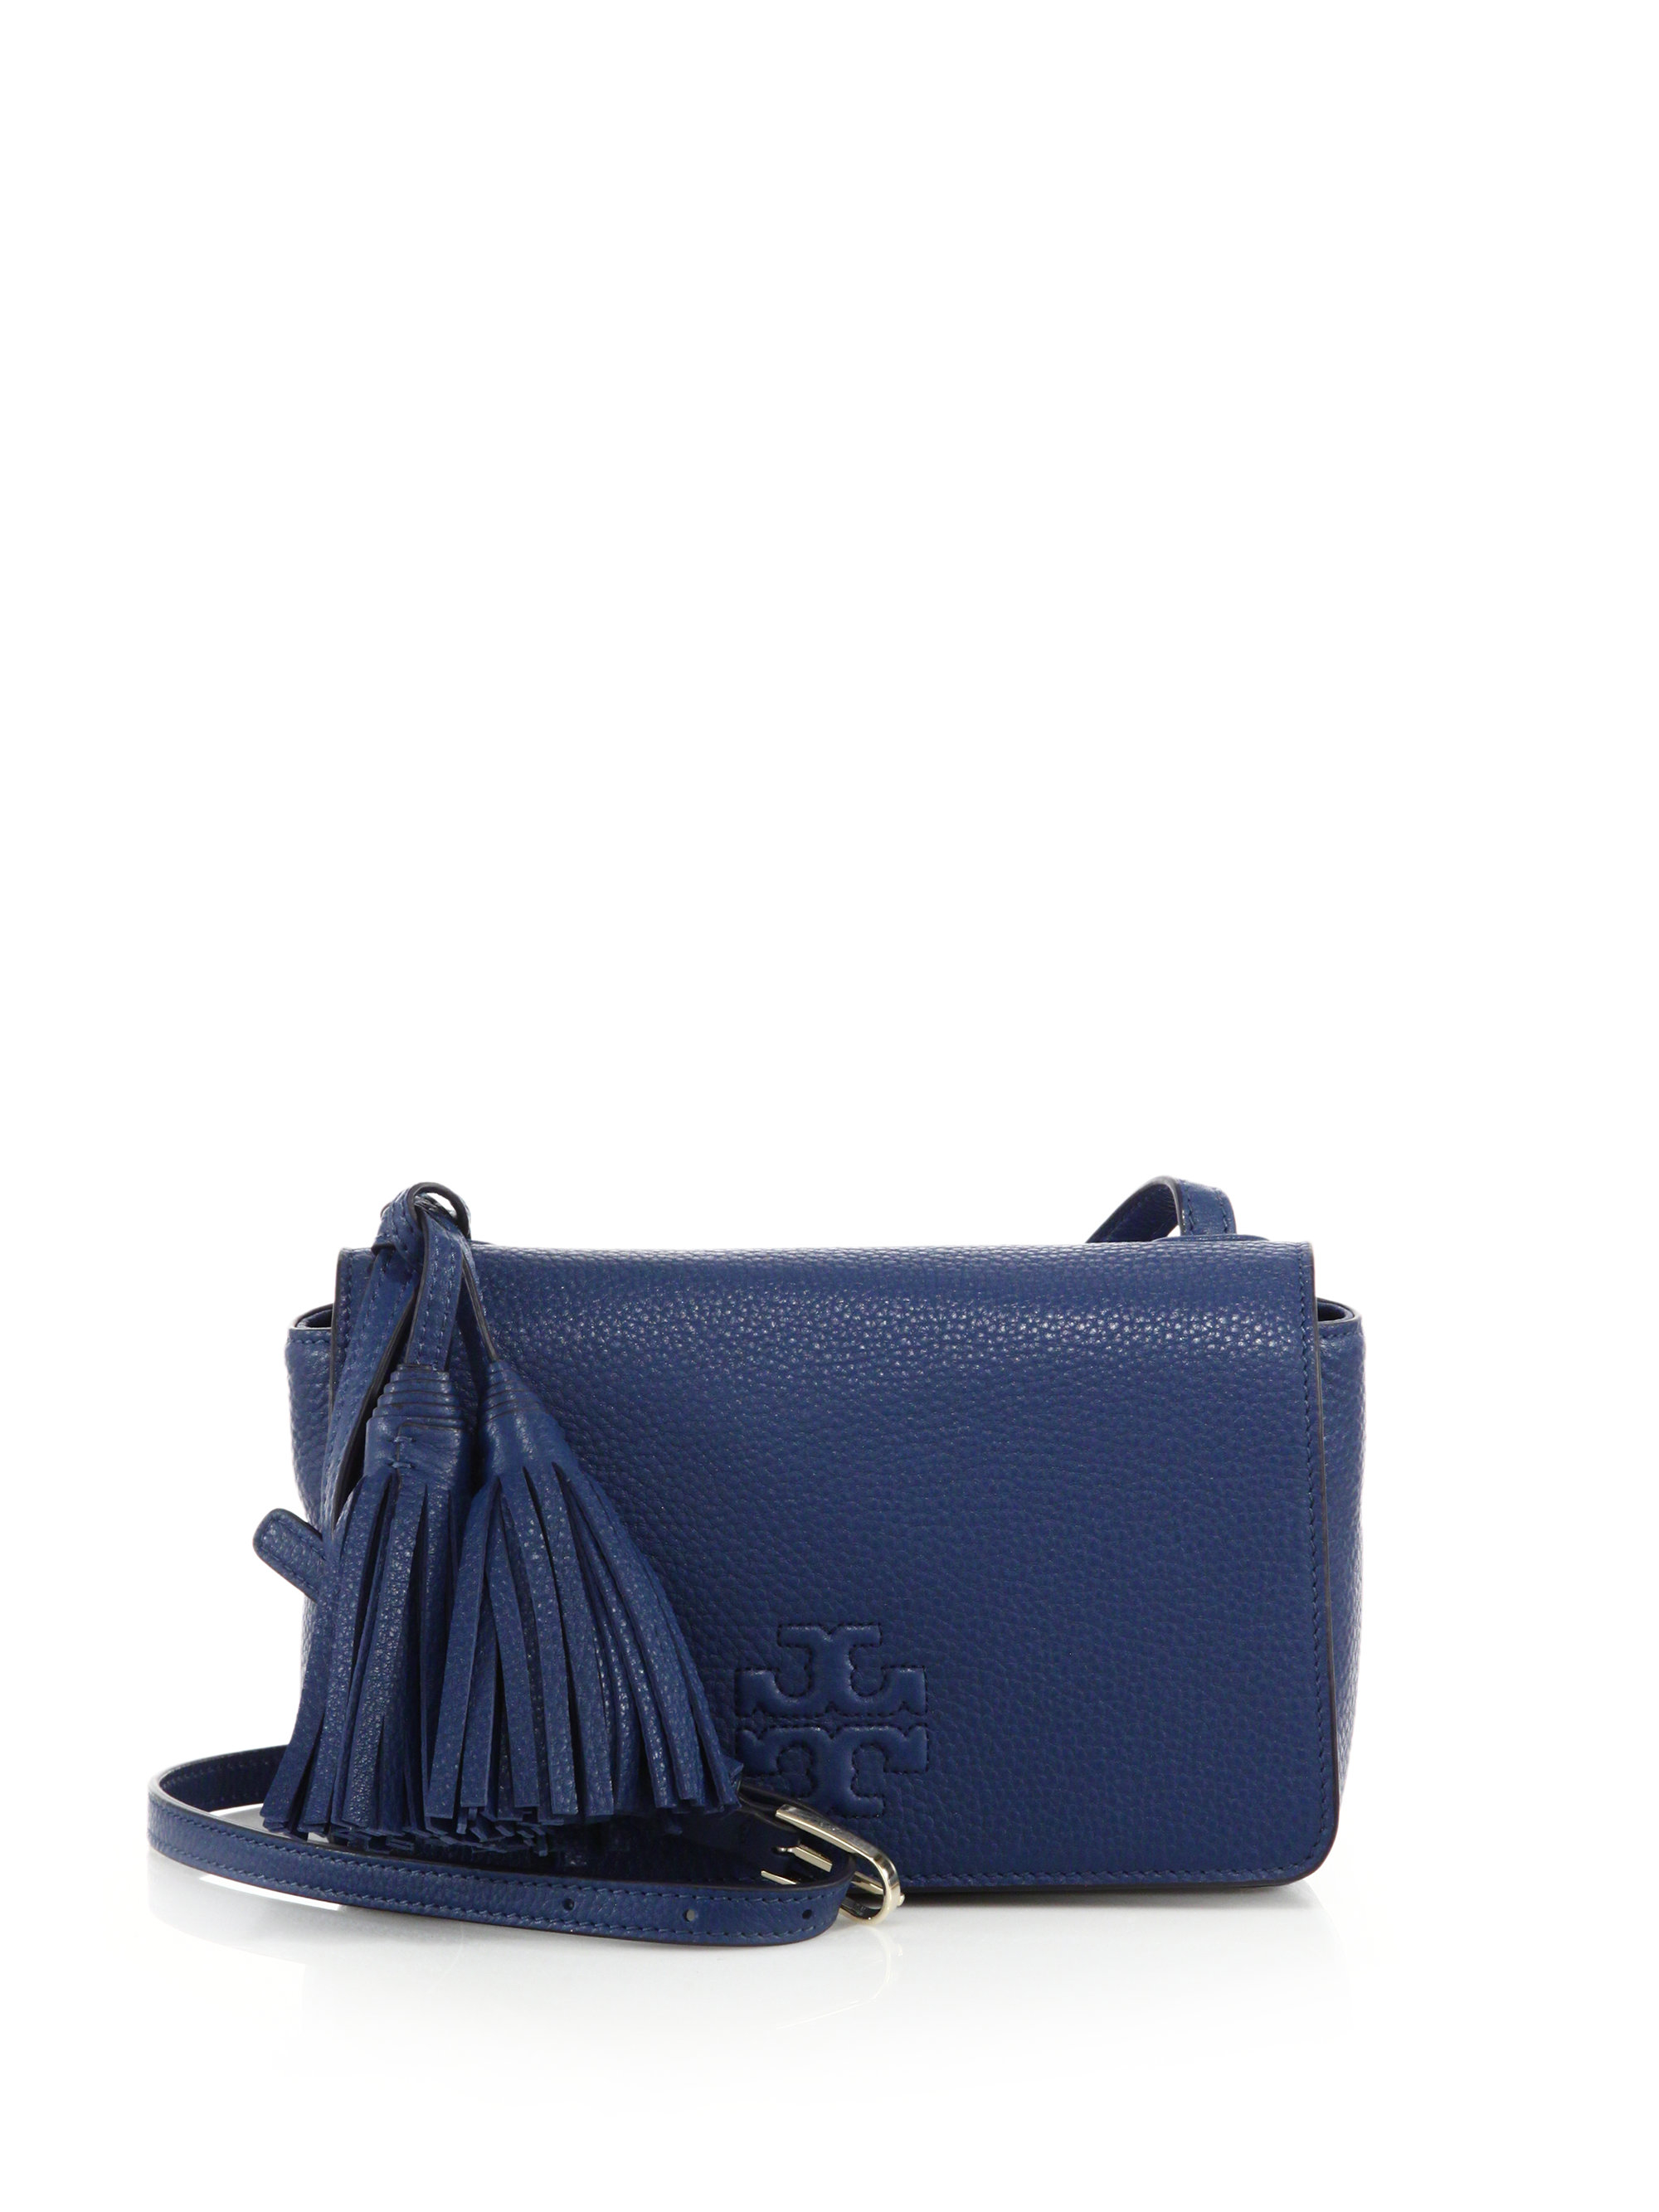 Tory Burch Thea Mini Leather Tassel Crossbody Bag in Blue | Lyst